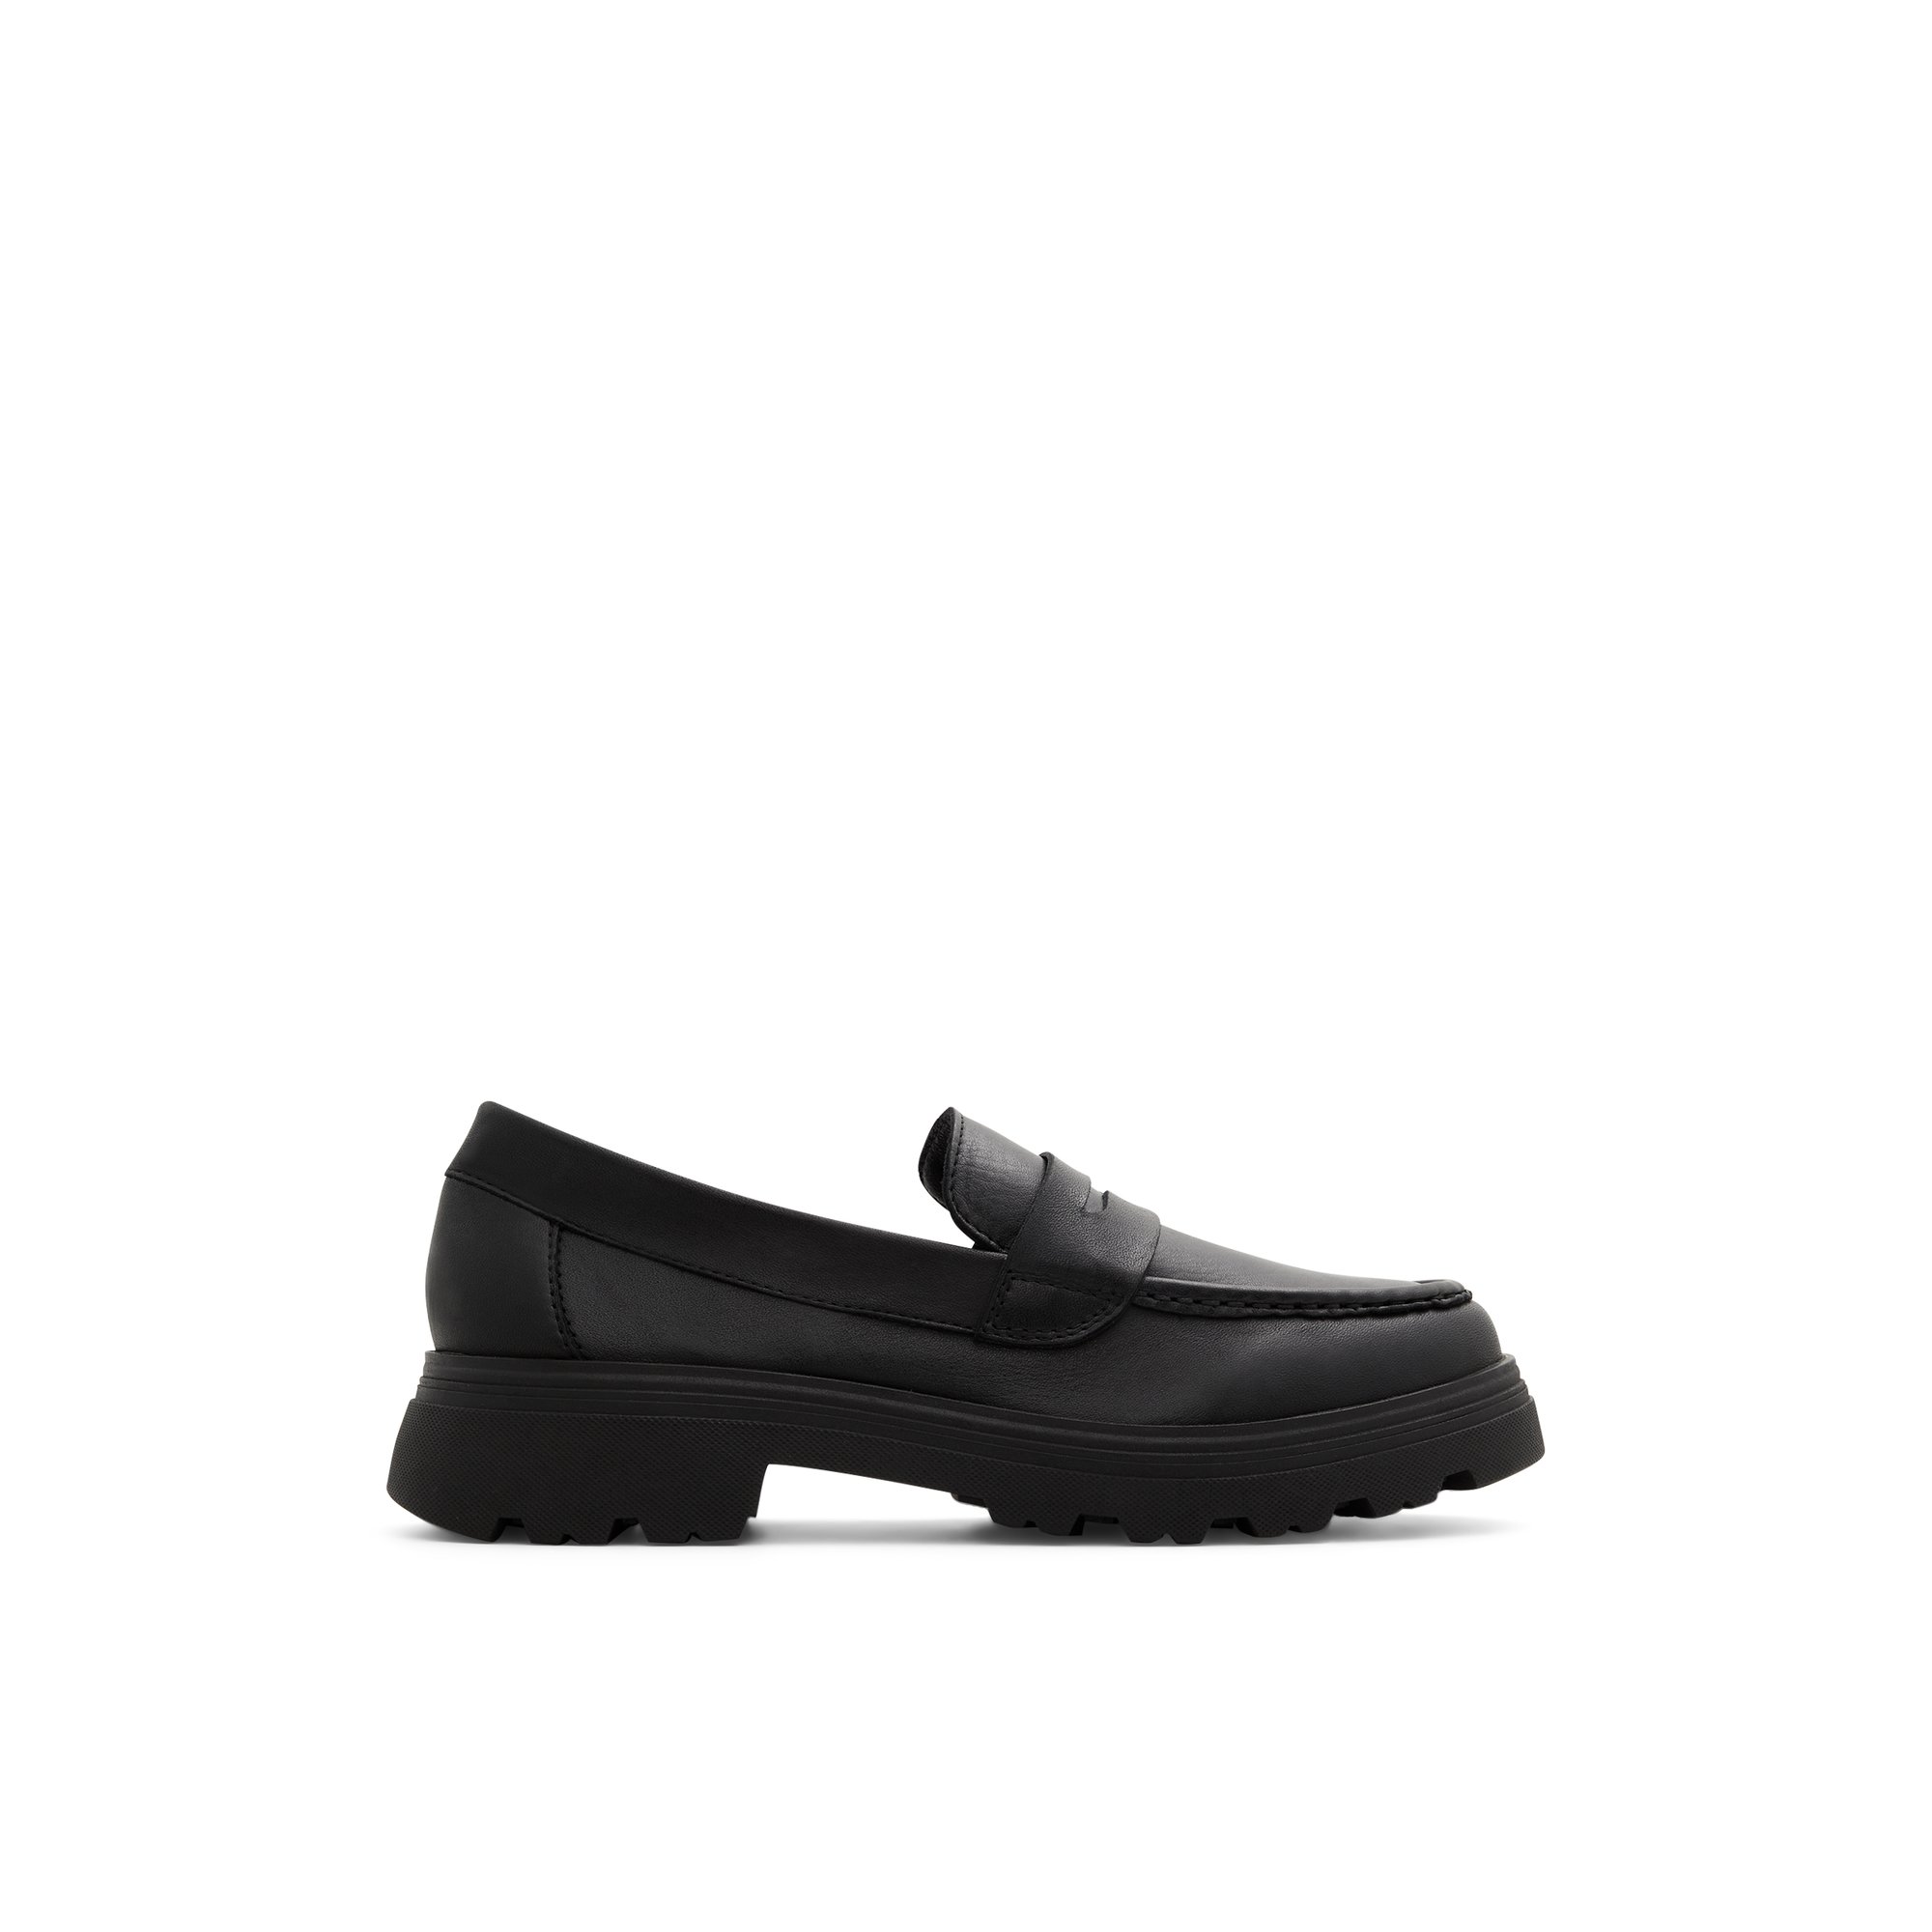 ALDO Biglect - Women's Loafers - Black